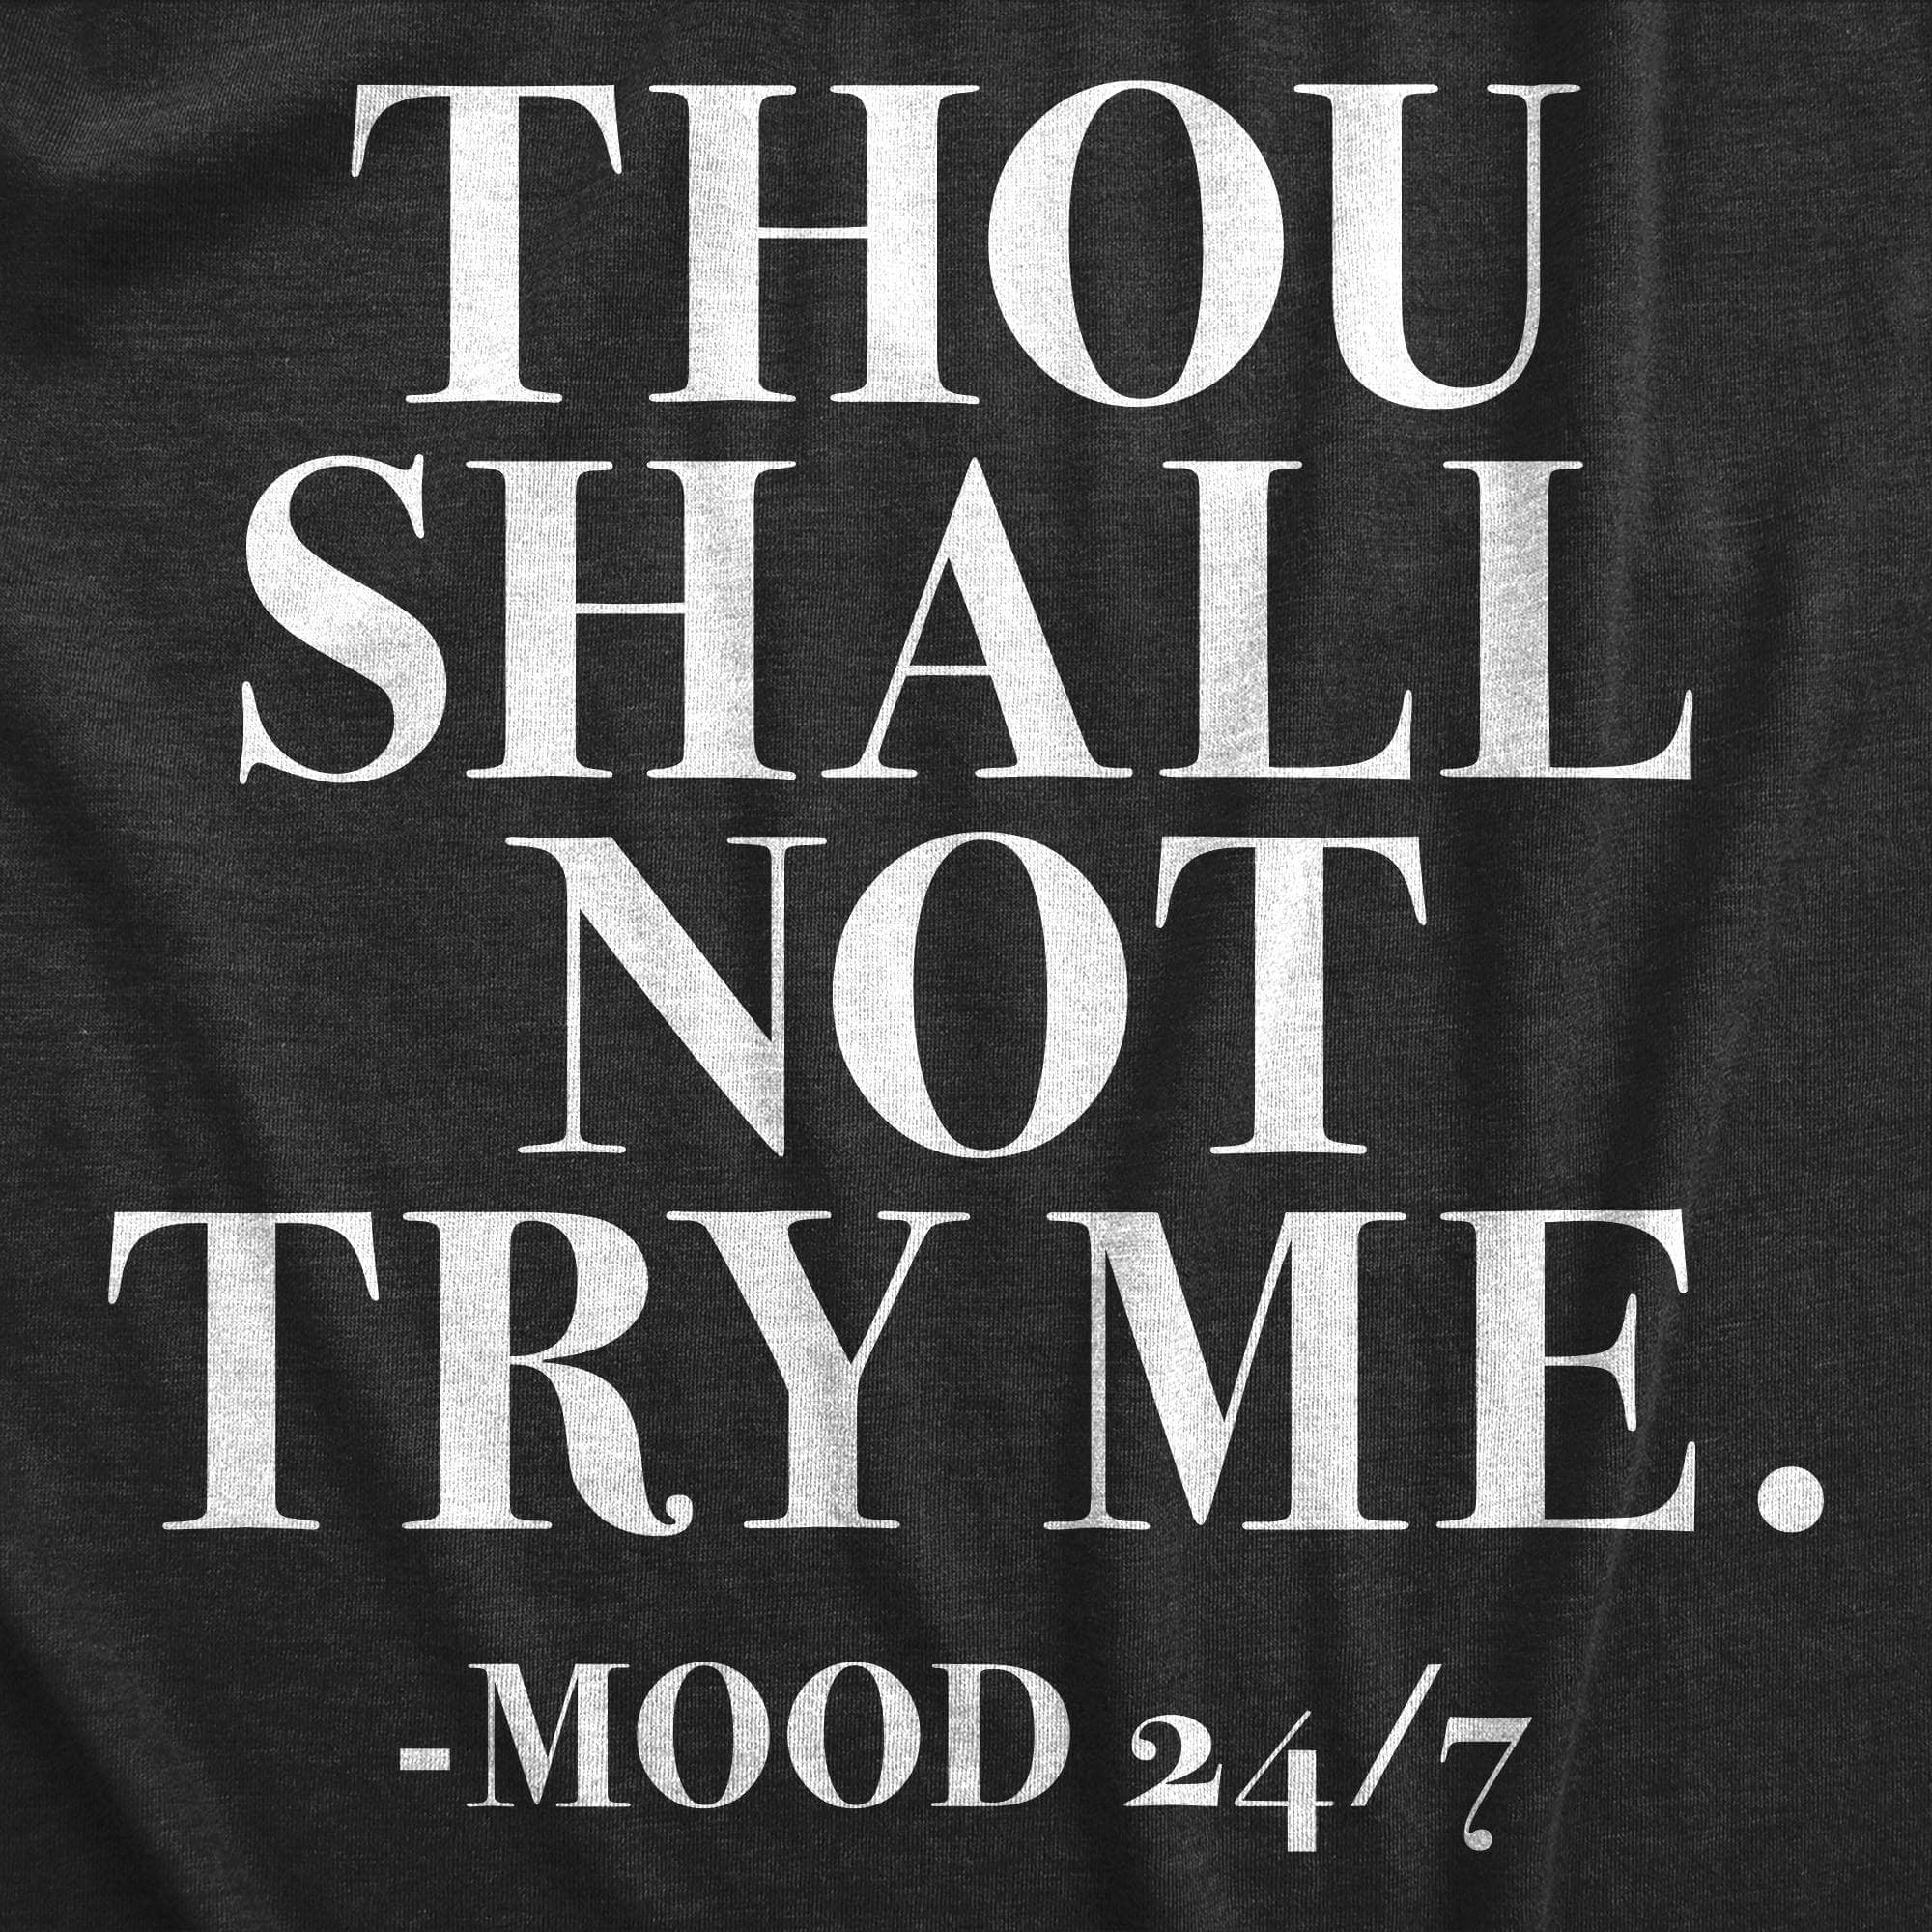 Thou Shall Not Try Me Men's Tshirt  -  Crazy Dog T-Shirts